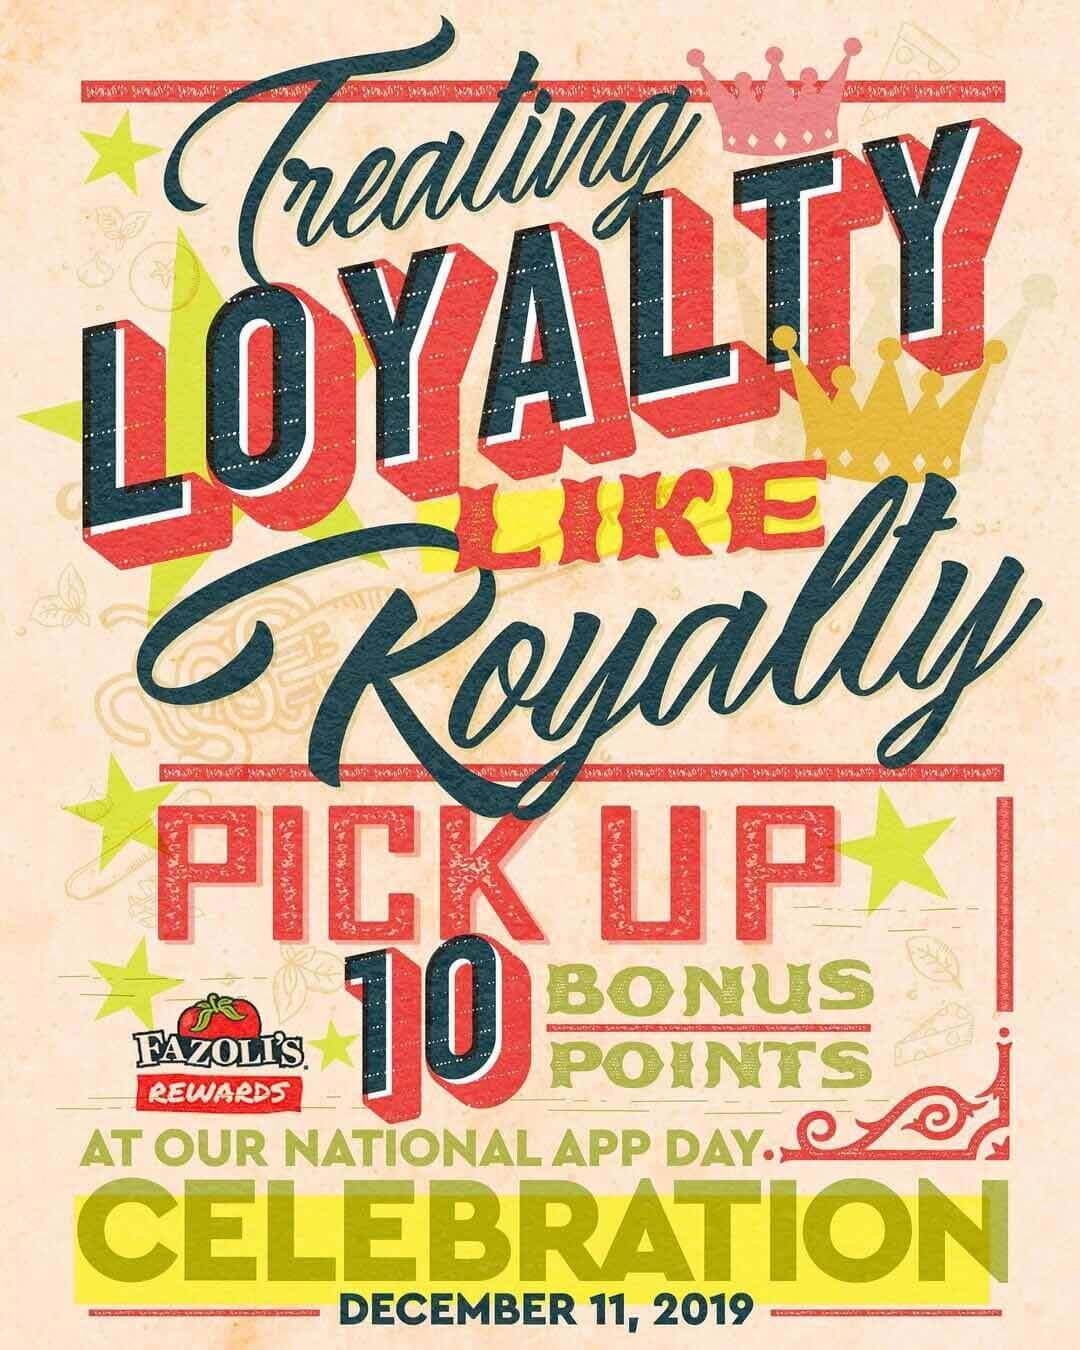 Illustrated design promoting a loyalty program 